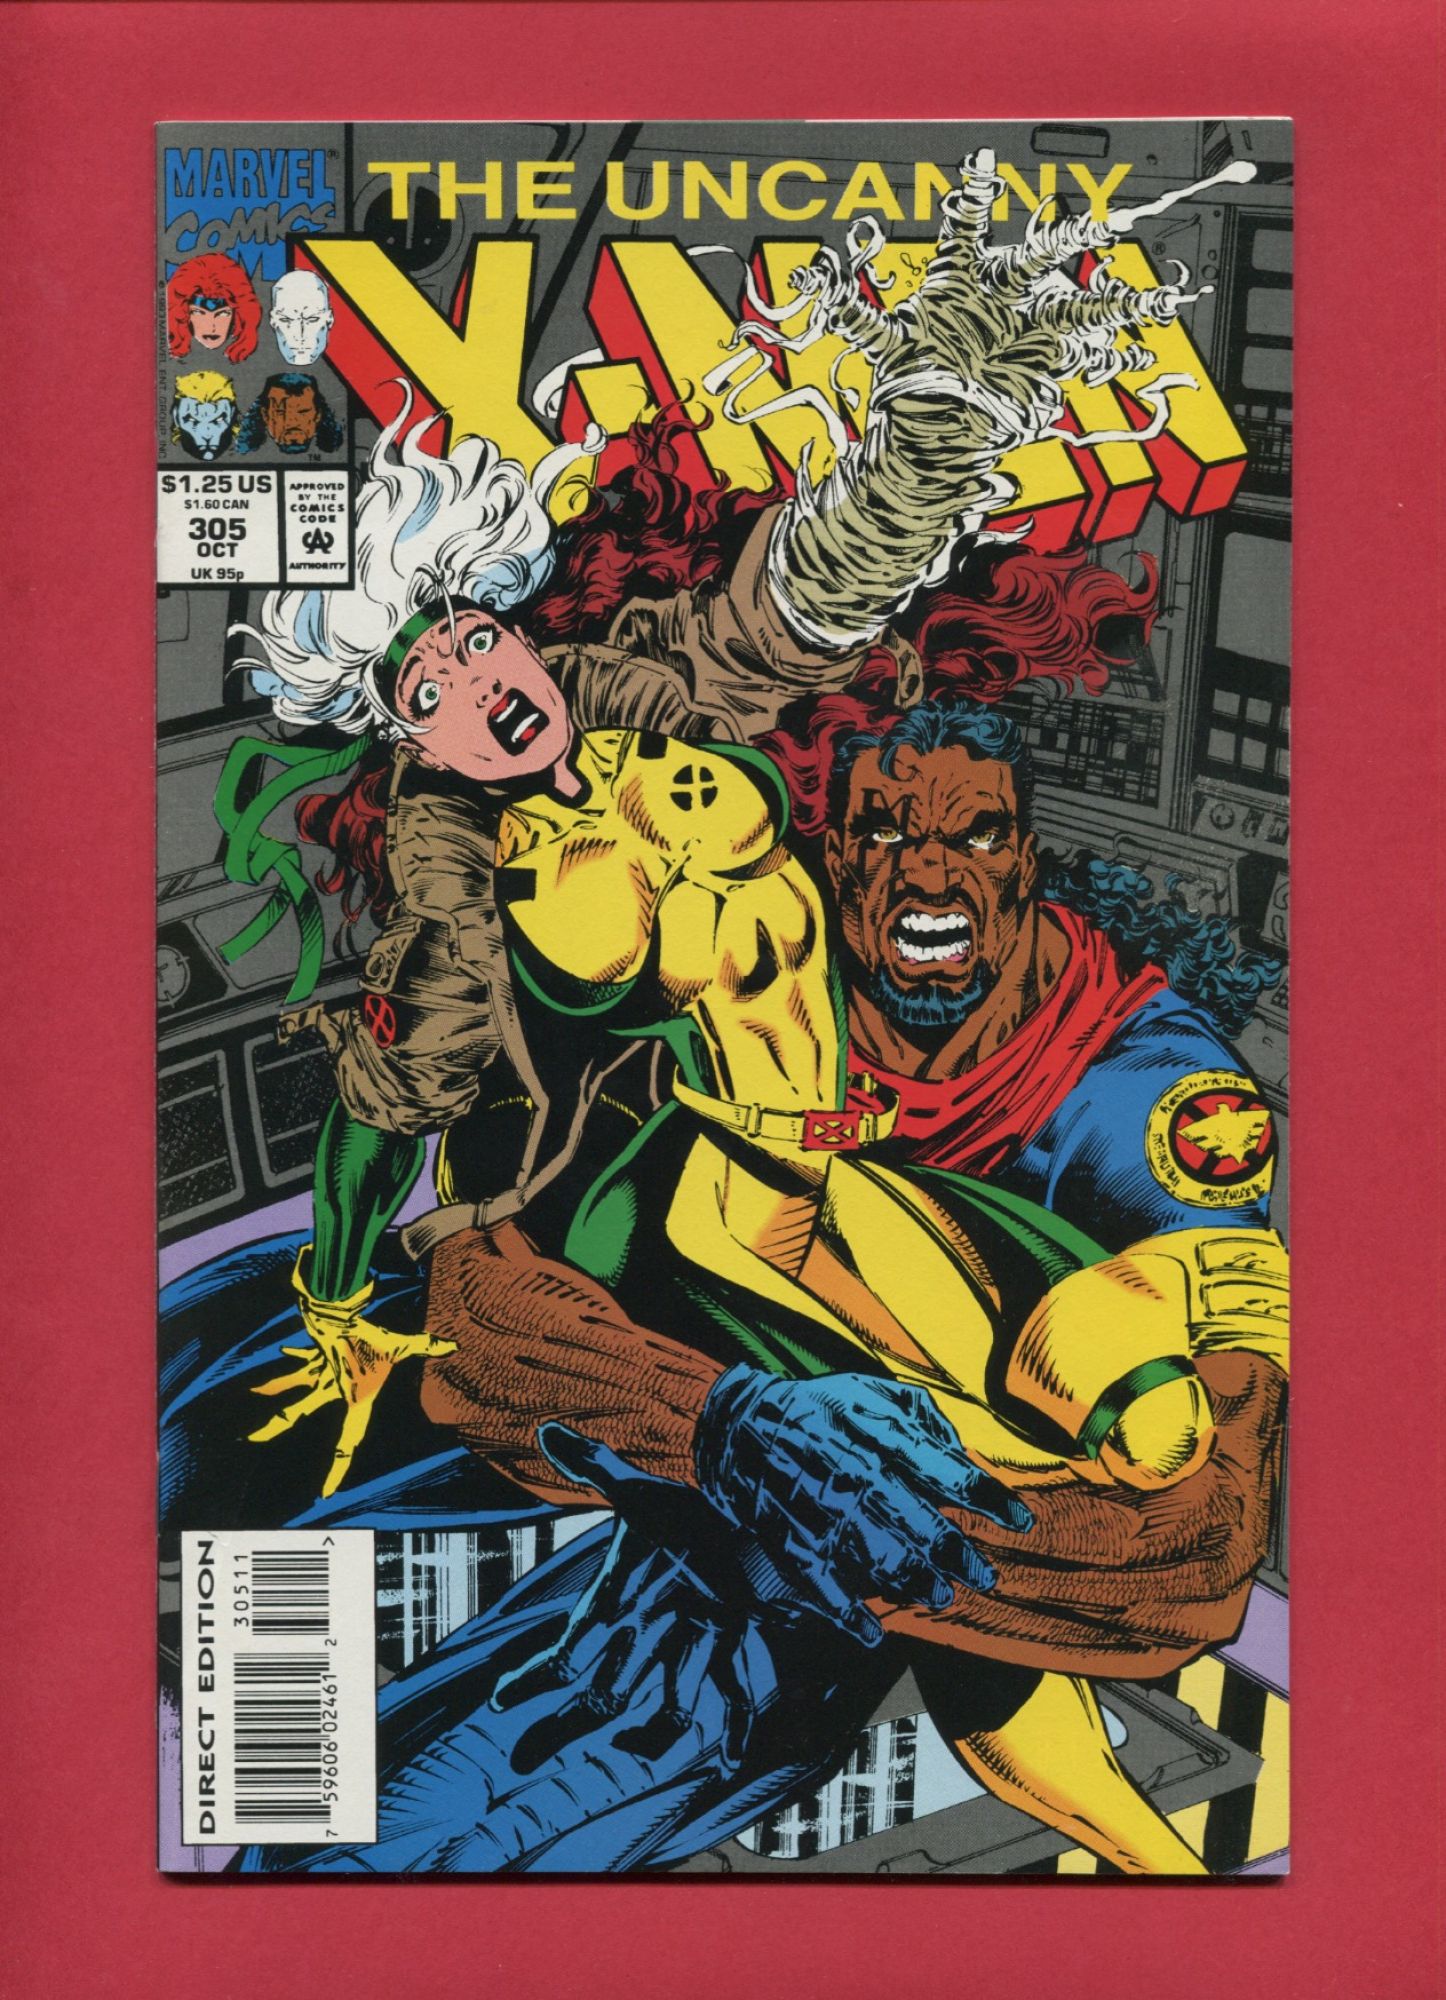 Uncanny X-Men #305, Oct 1993, 7.5 VF-